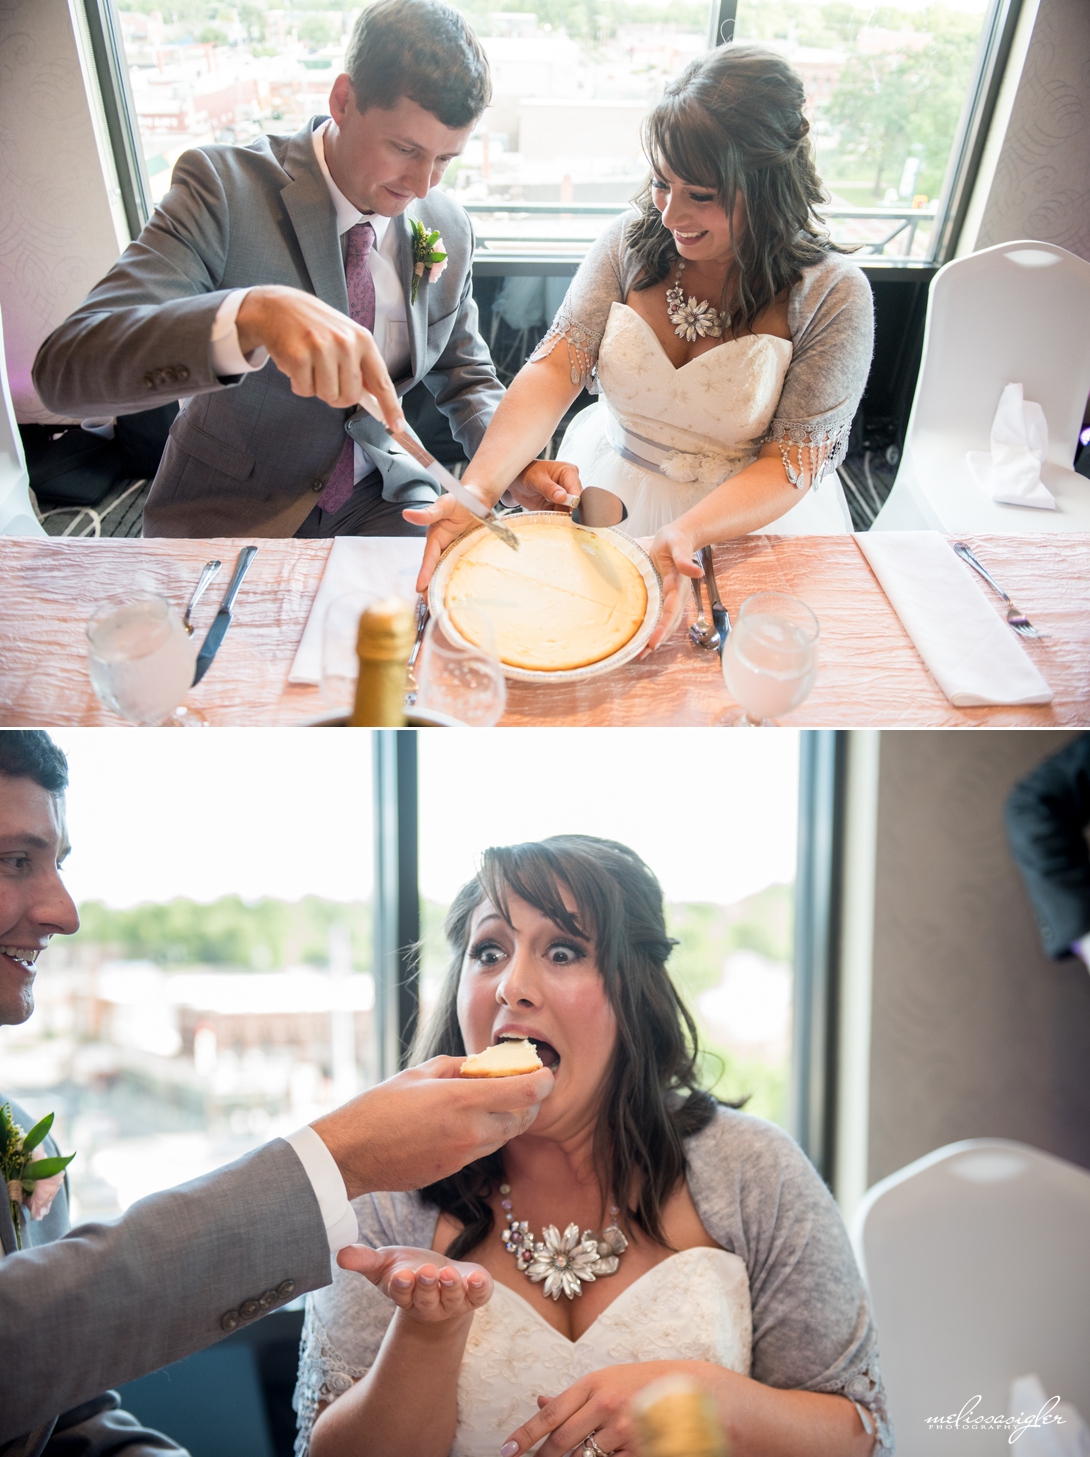 Bride and groom cut cheesecake